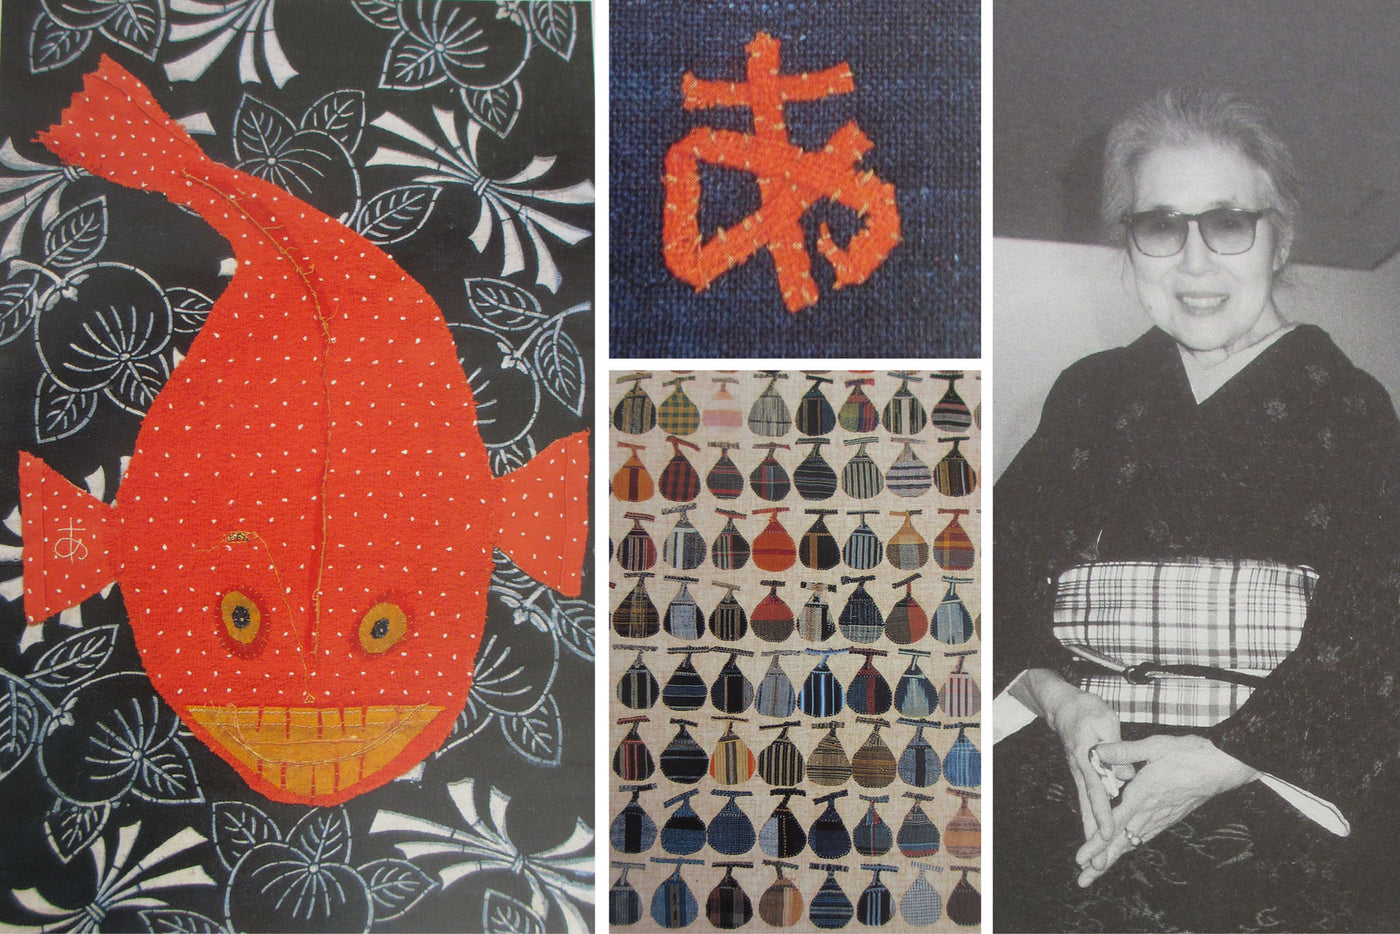 Ayako Miyawaki, Japanese textile artist